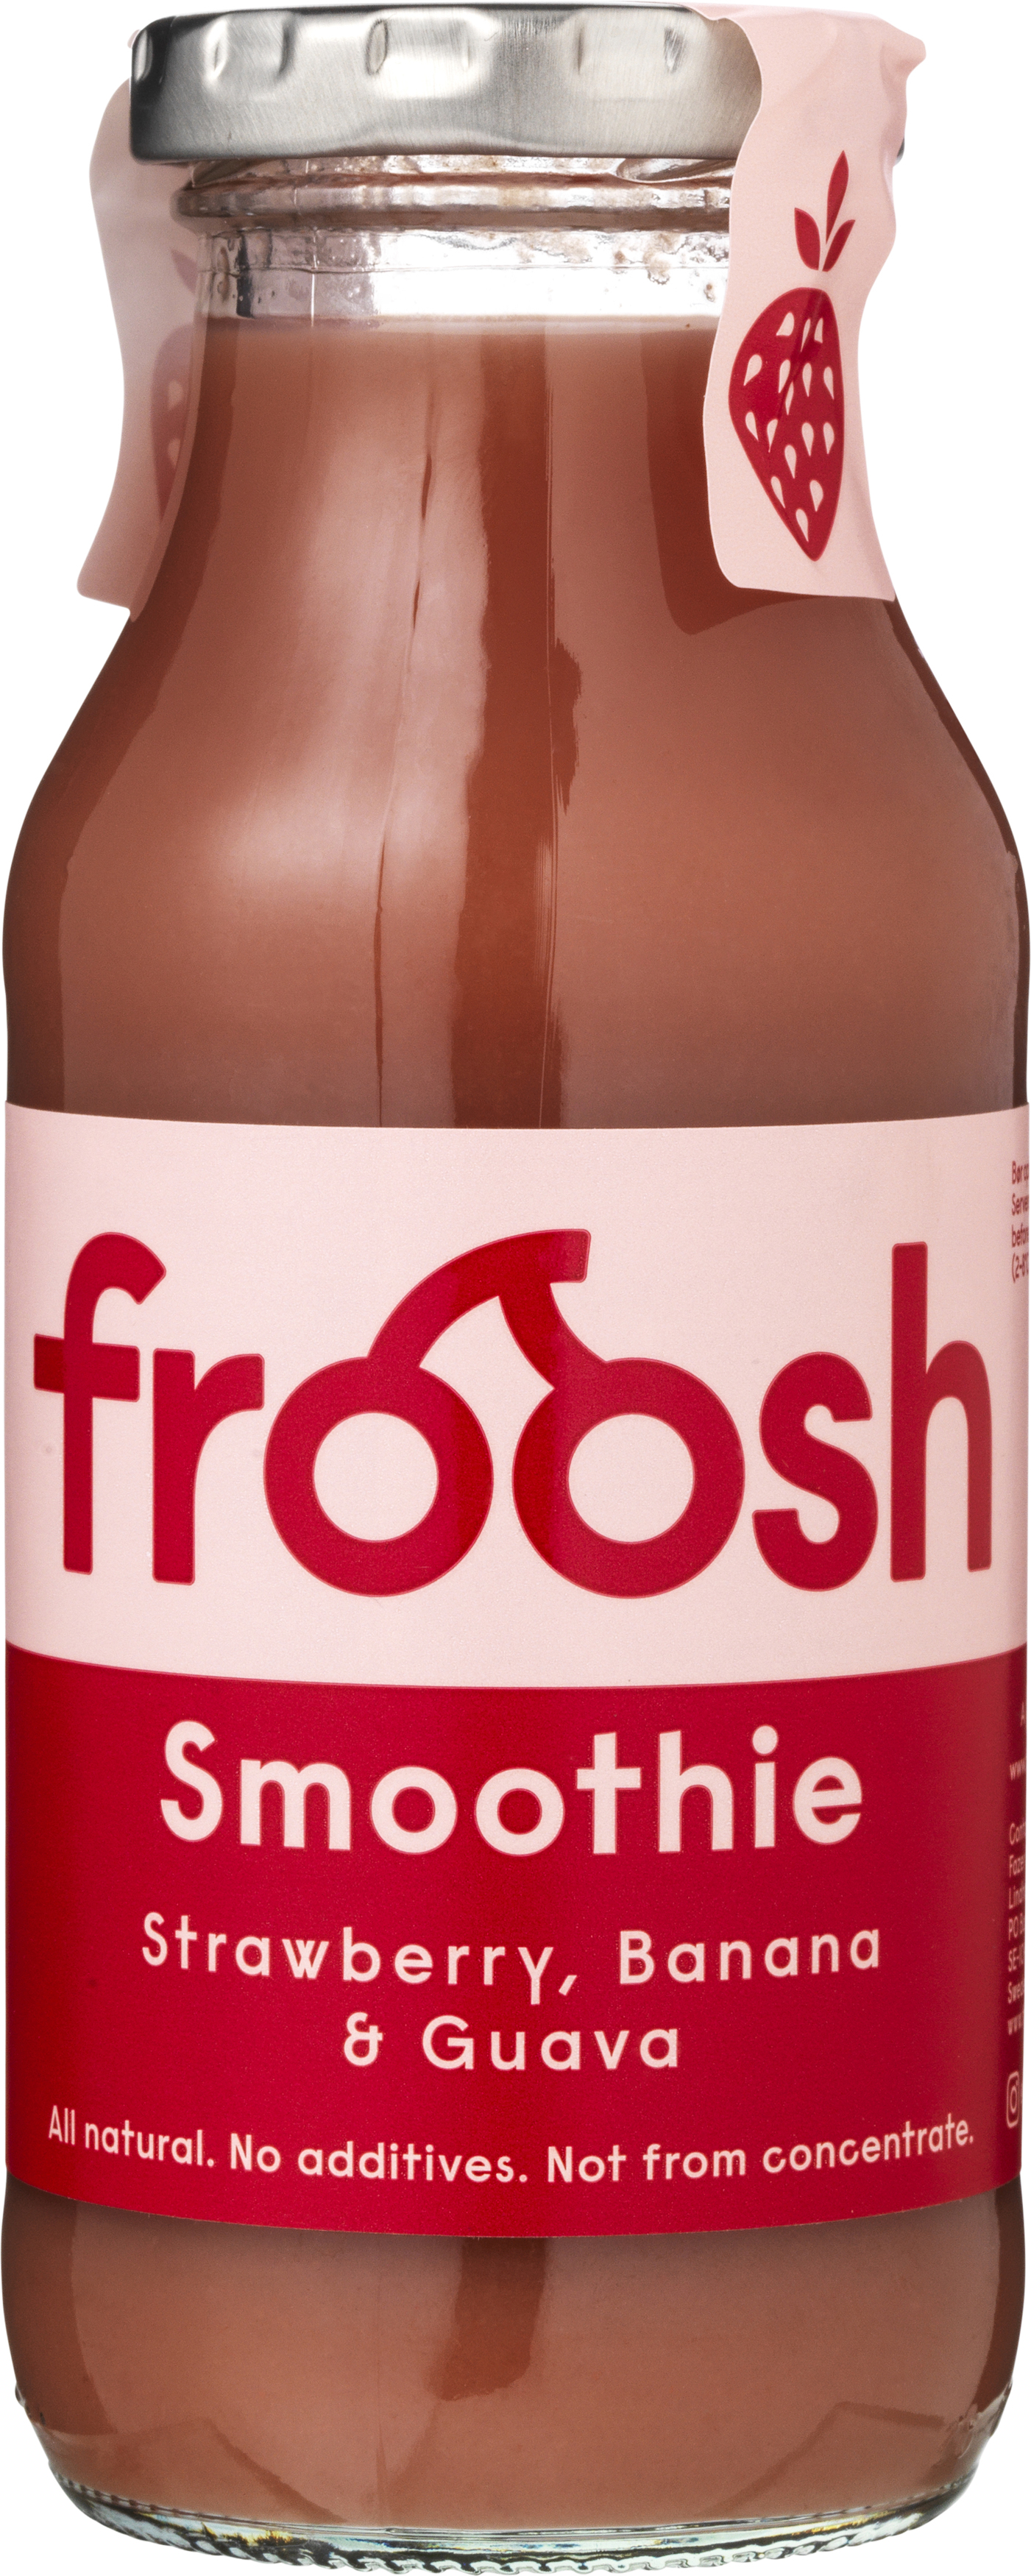 Froosh Smoothie Jordbær/Banan/Guava Smoothie 250 ml. - SMOOTHIE - VIN MED  MERE .DK